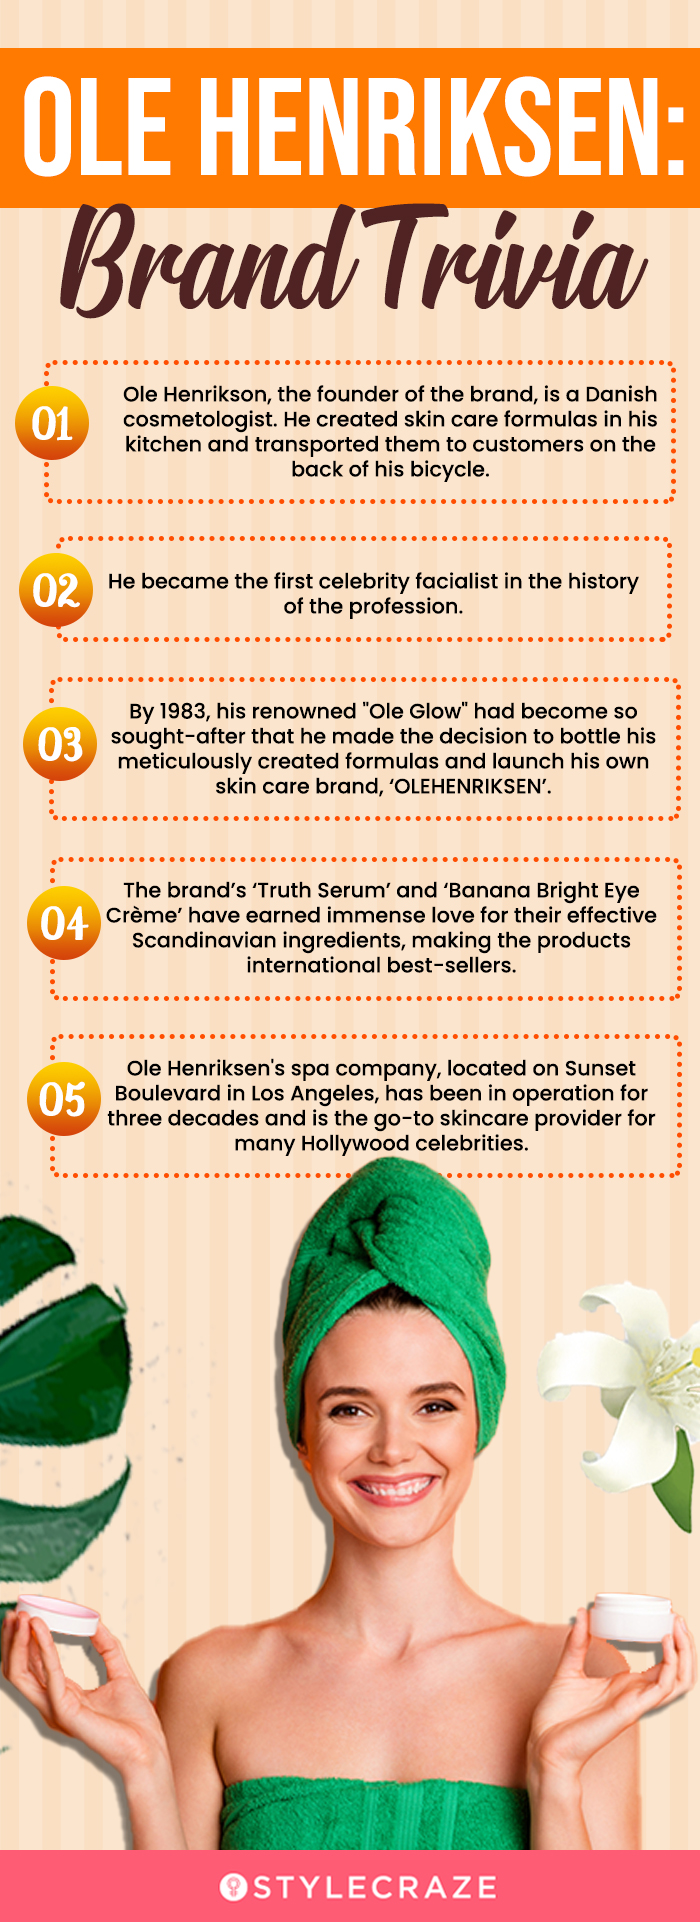 Ole Henriksen: Brand Trivia (infographic)